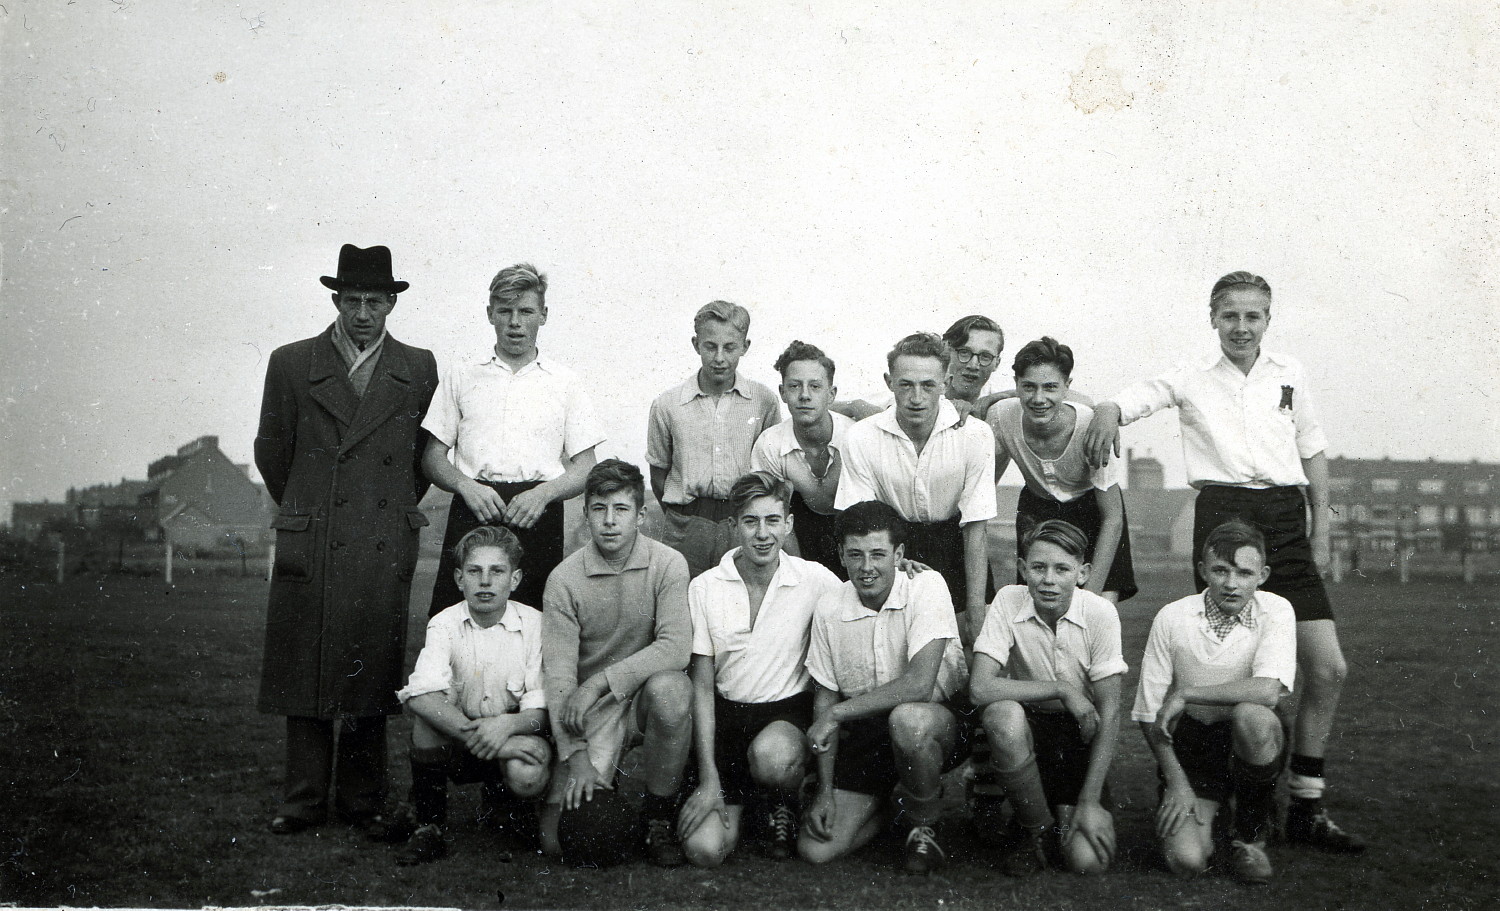 Voorburg Netherlands, soccer team, c.1948